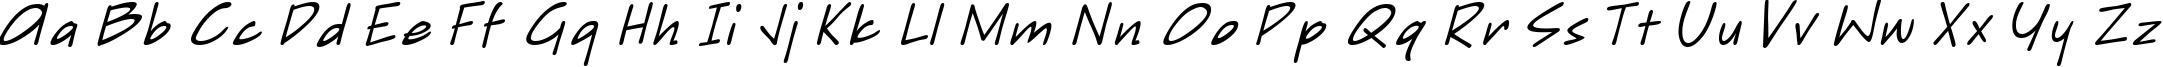 Пример написания английского алфавита шрифтом Sketchpad Note  Italic